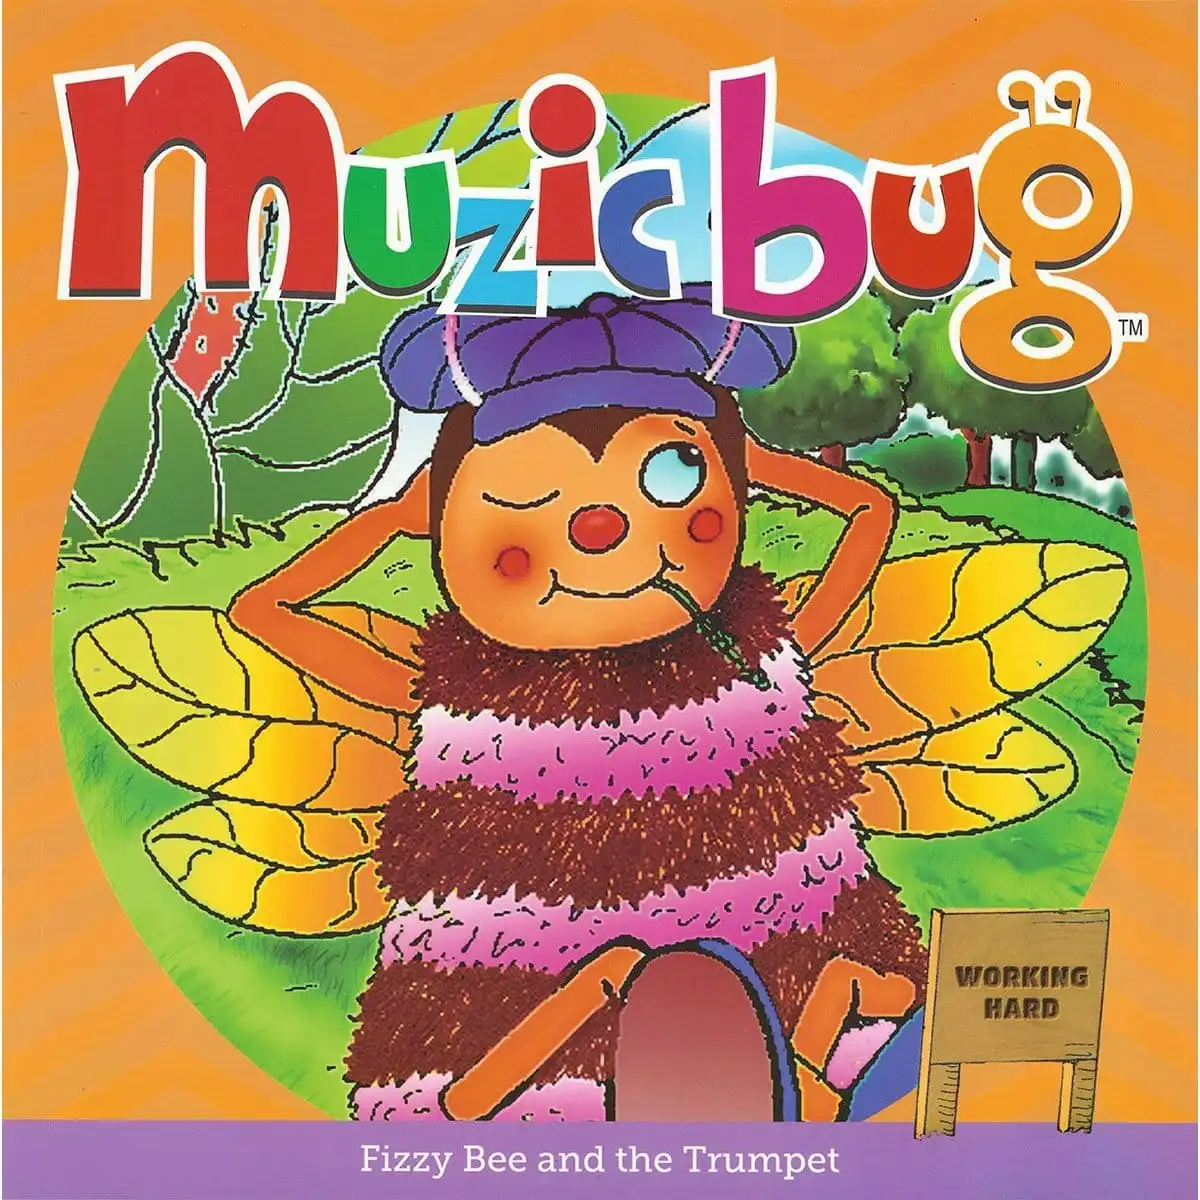 Promotional Muzicbug-fizzy Bee & Trumpet